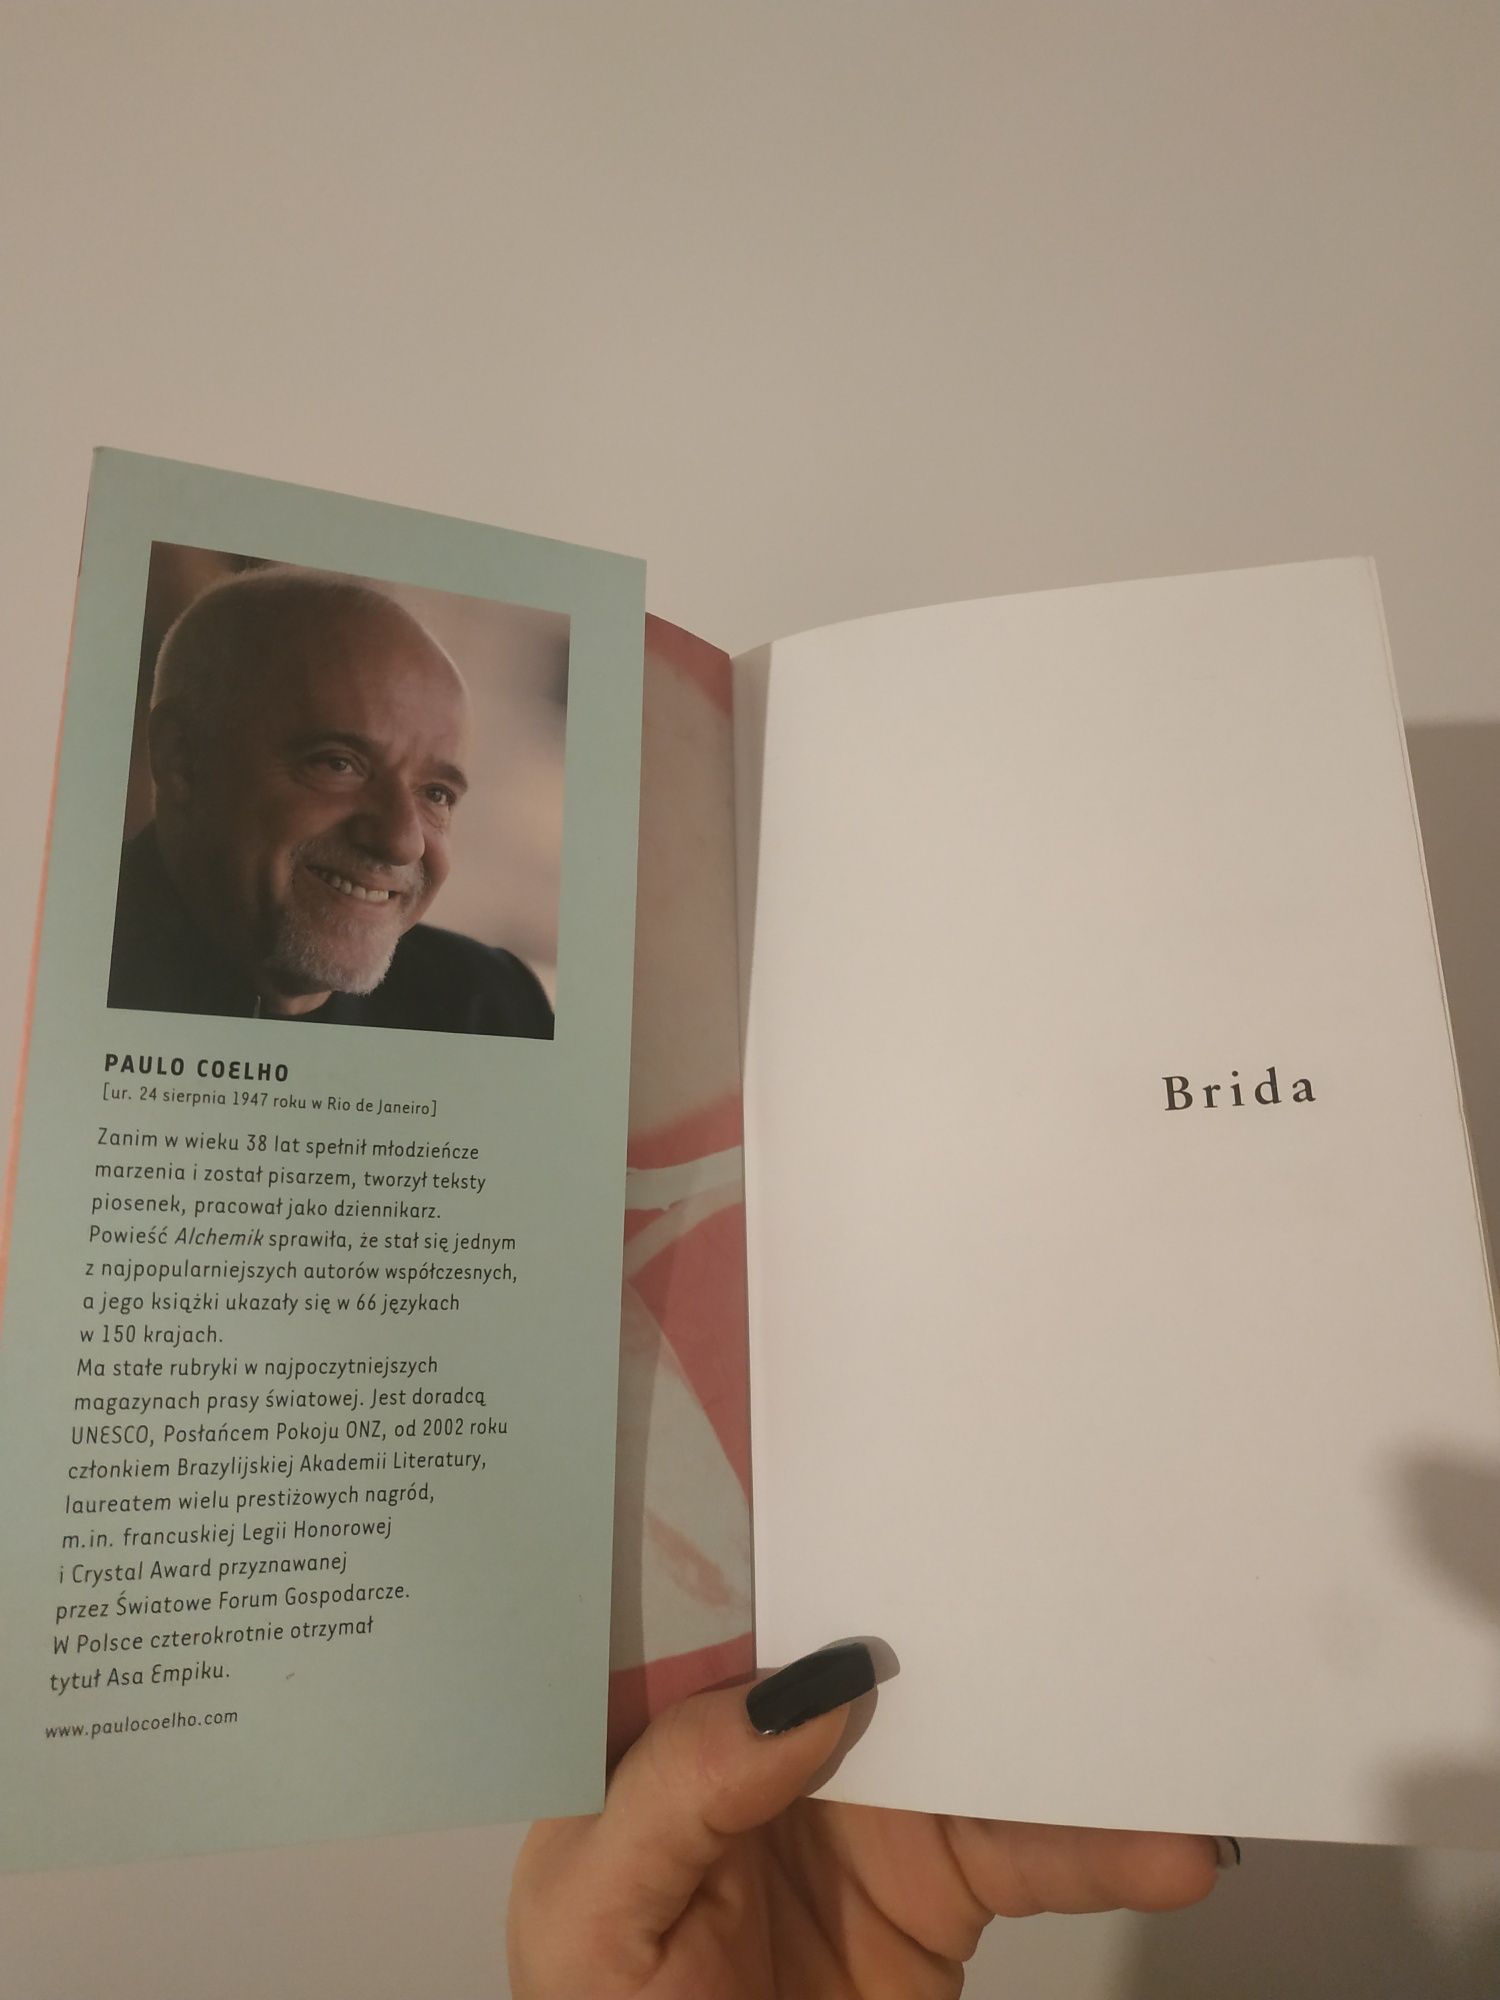 Książka,,Brida " Paulo Coelho. Jak nowa